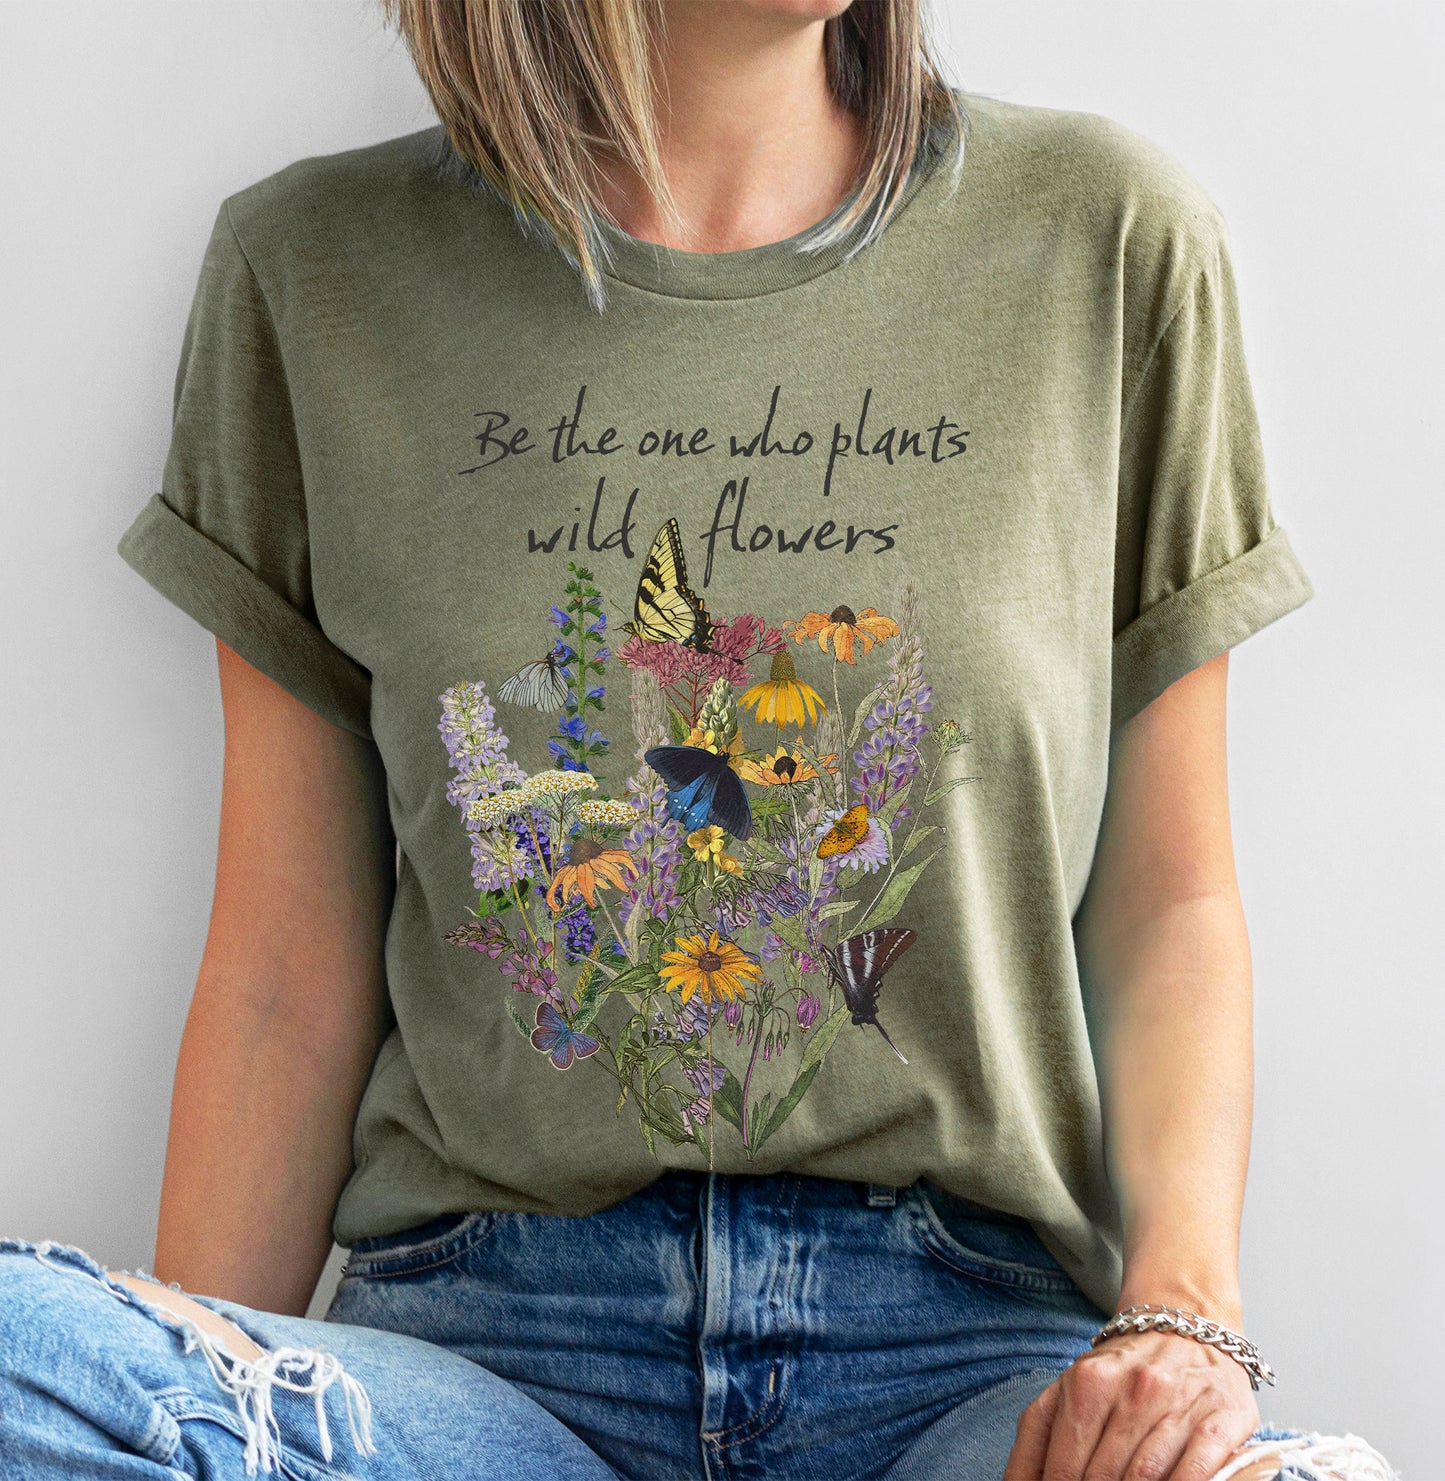 Naturalist Butterfly Garden tee shirt, Native Plants, Swallowtail, Ecology, Conservation, Positivity, Save the Bees, garden gift, NO AI!